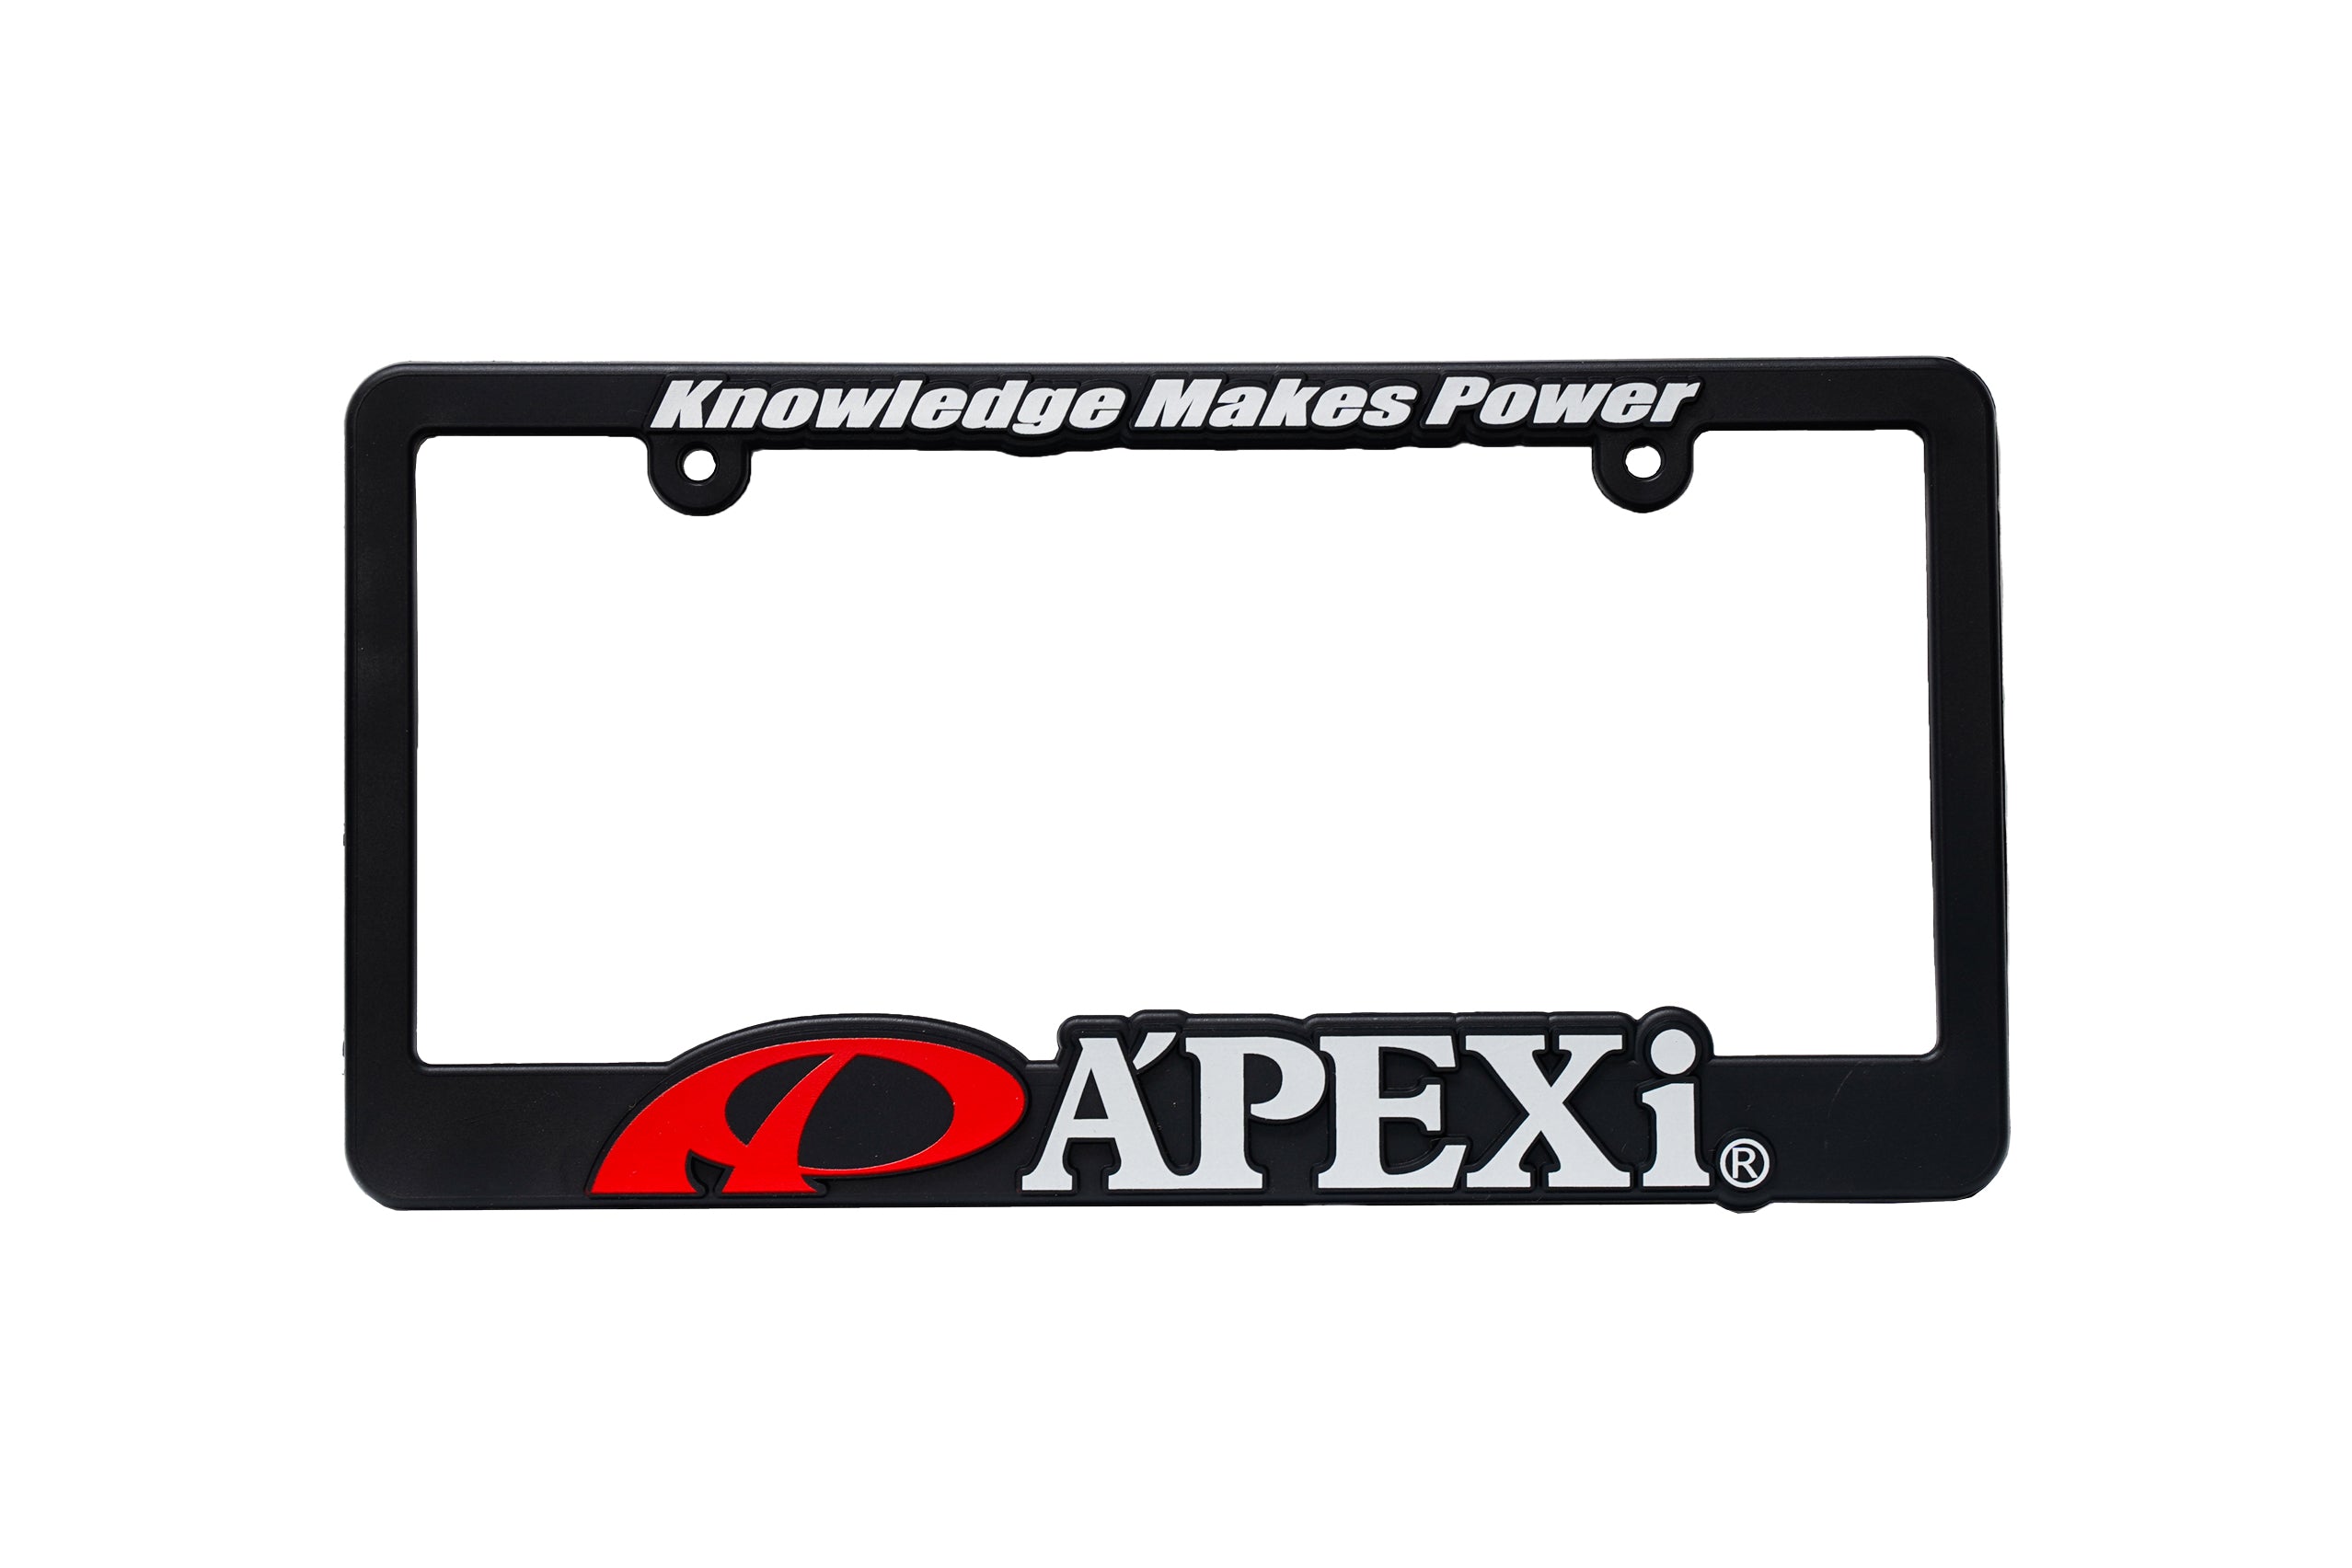 A'PEXi - License Plate Frame [Ver 2.0]